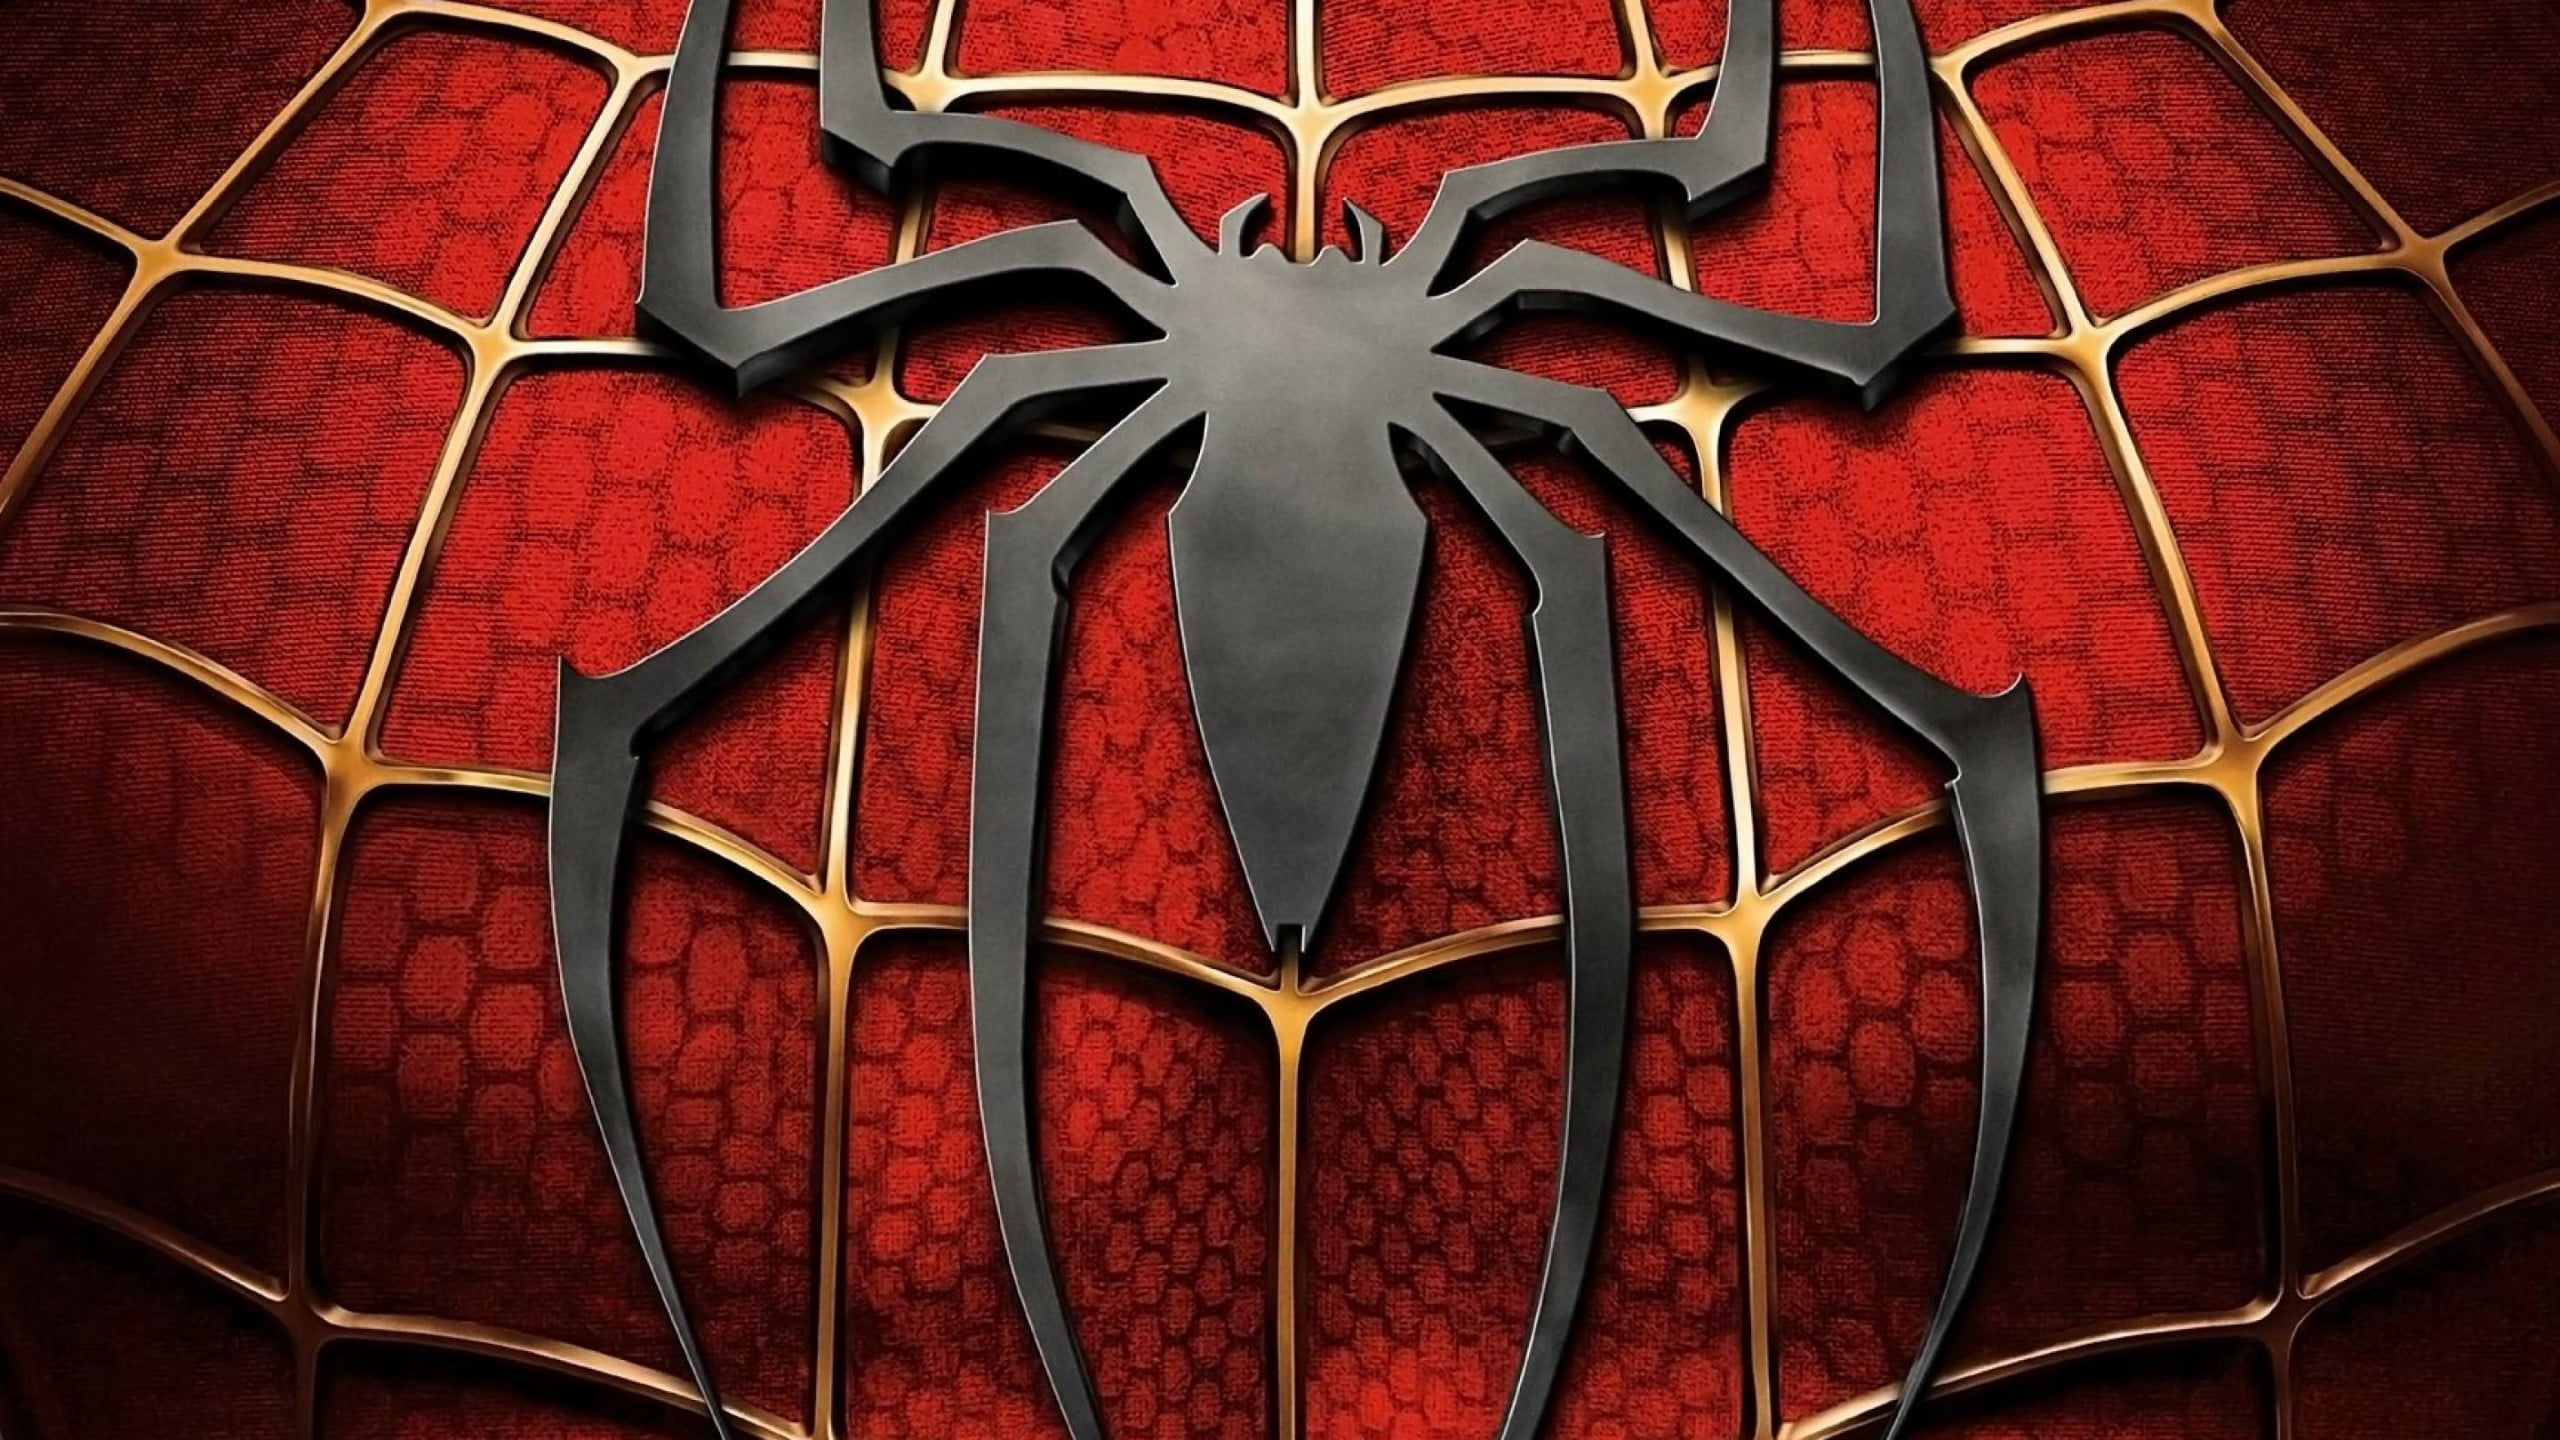 Marvel Spider-Man logo, Marvel Comics, red, pattern, no people